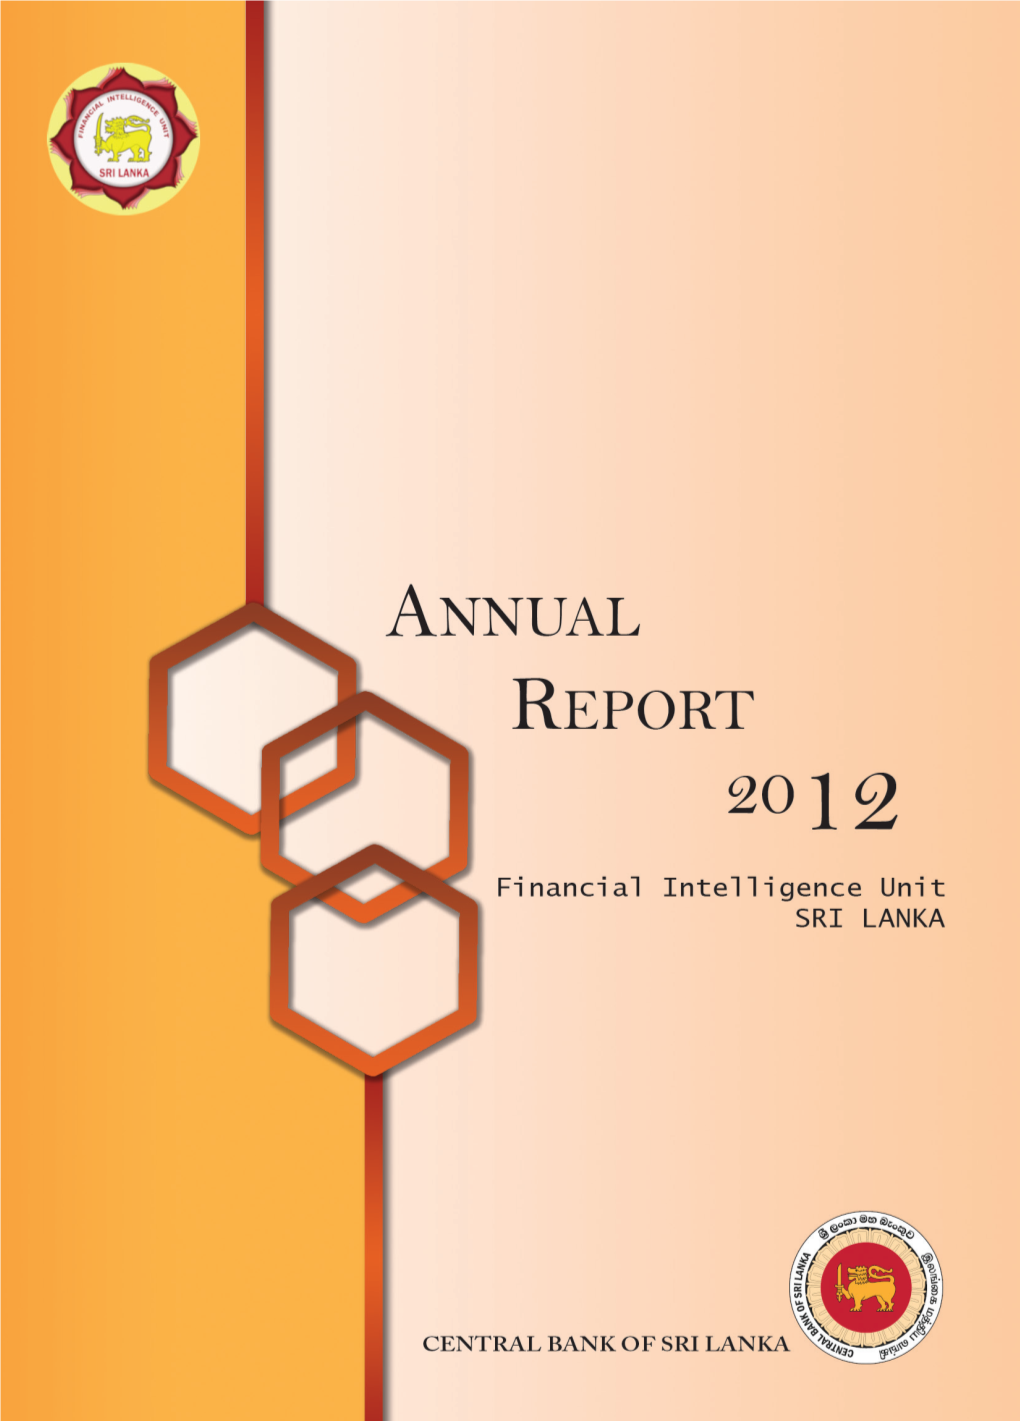 Annual Report 2012, Financial Intelligence Unit of Sri Lanka (Central Bank of Sri Lanka)